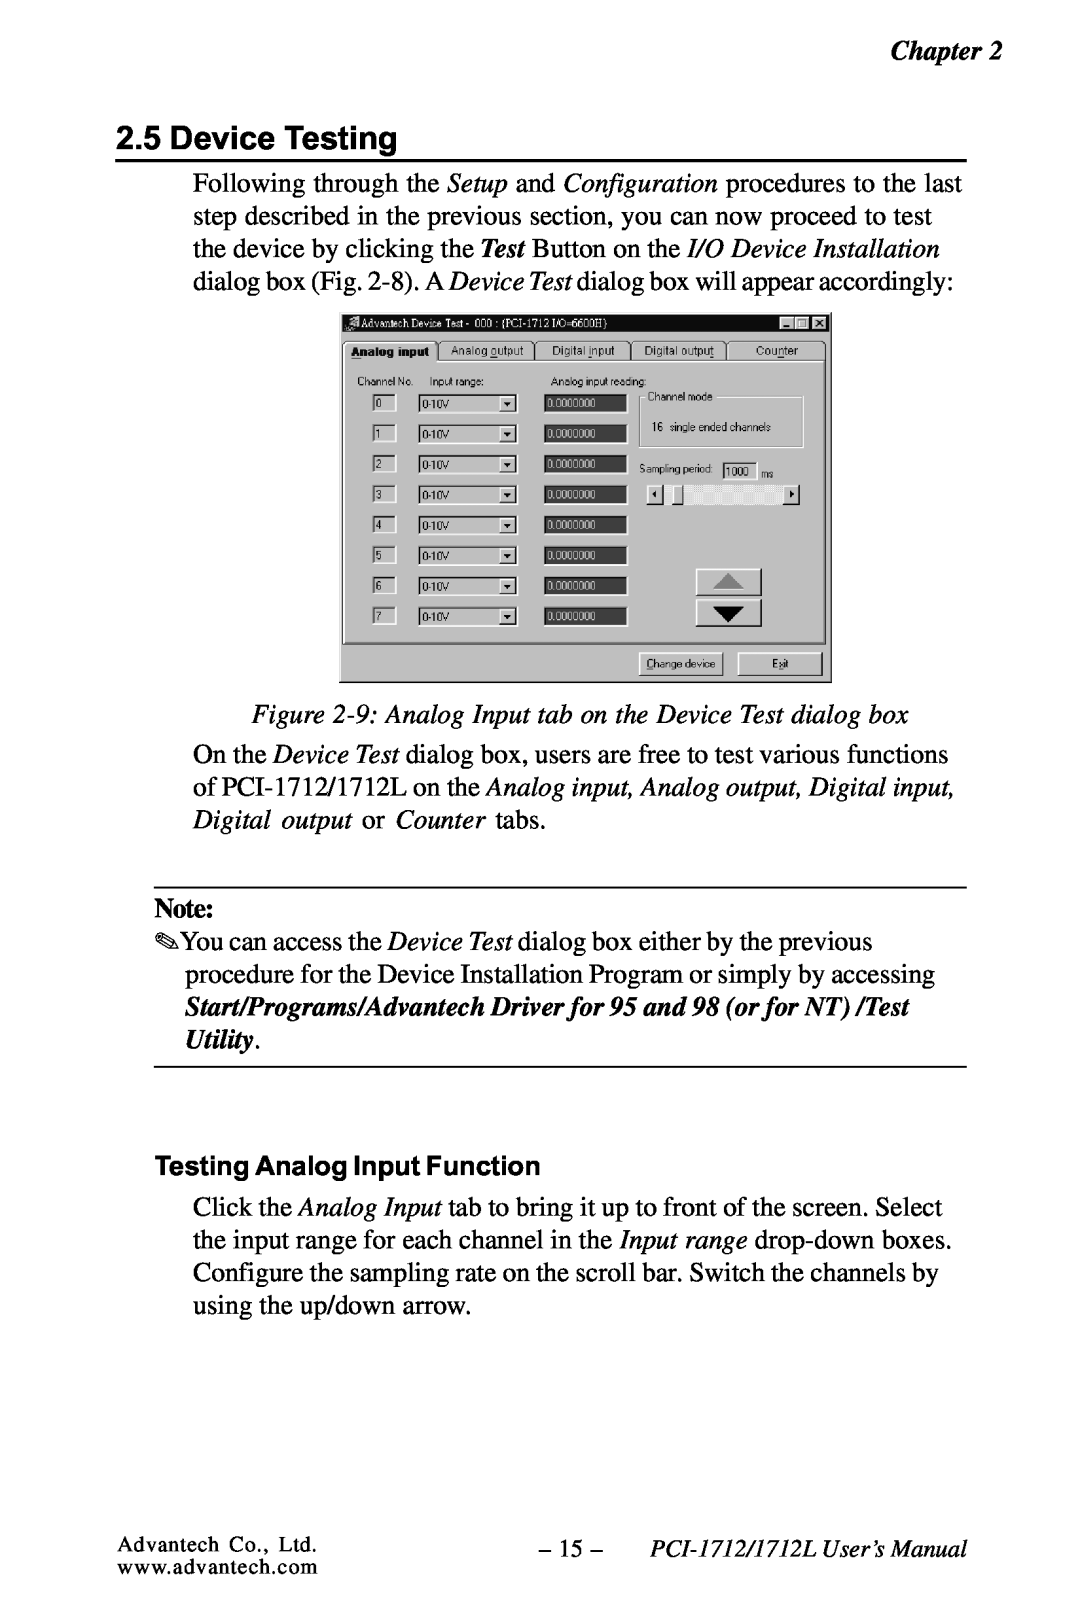 Konica Minolta PCI-1712L Device Testing, 9 Analog Input tab on the Device Test dialog box, Testing Analog Input Function 